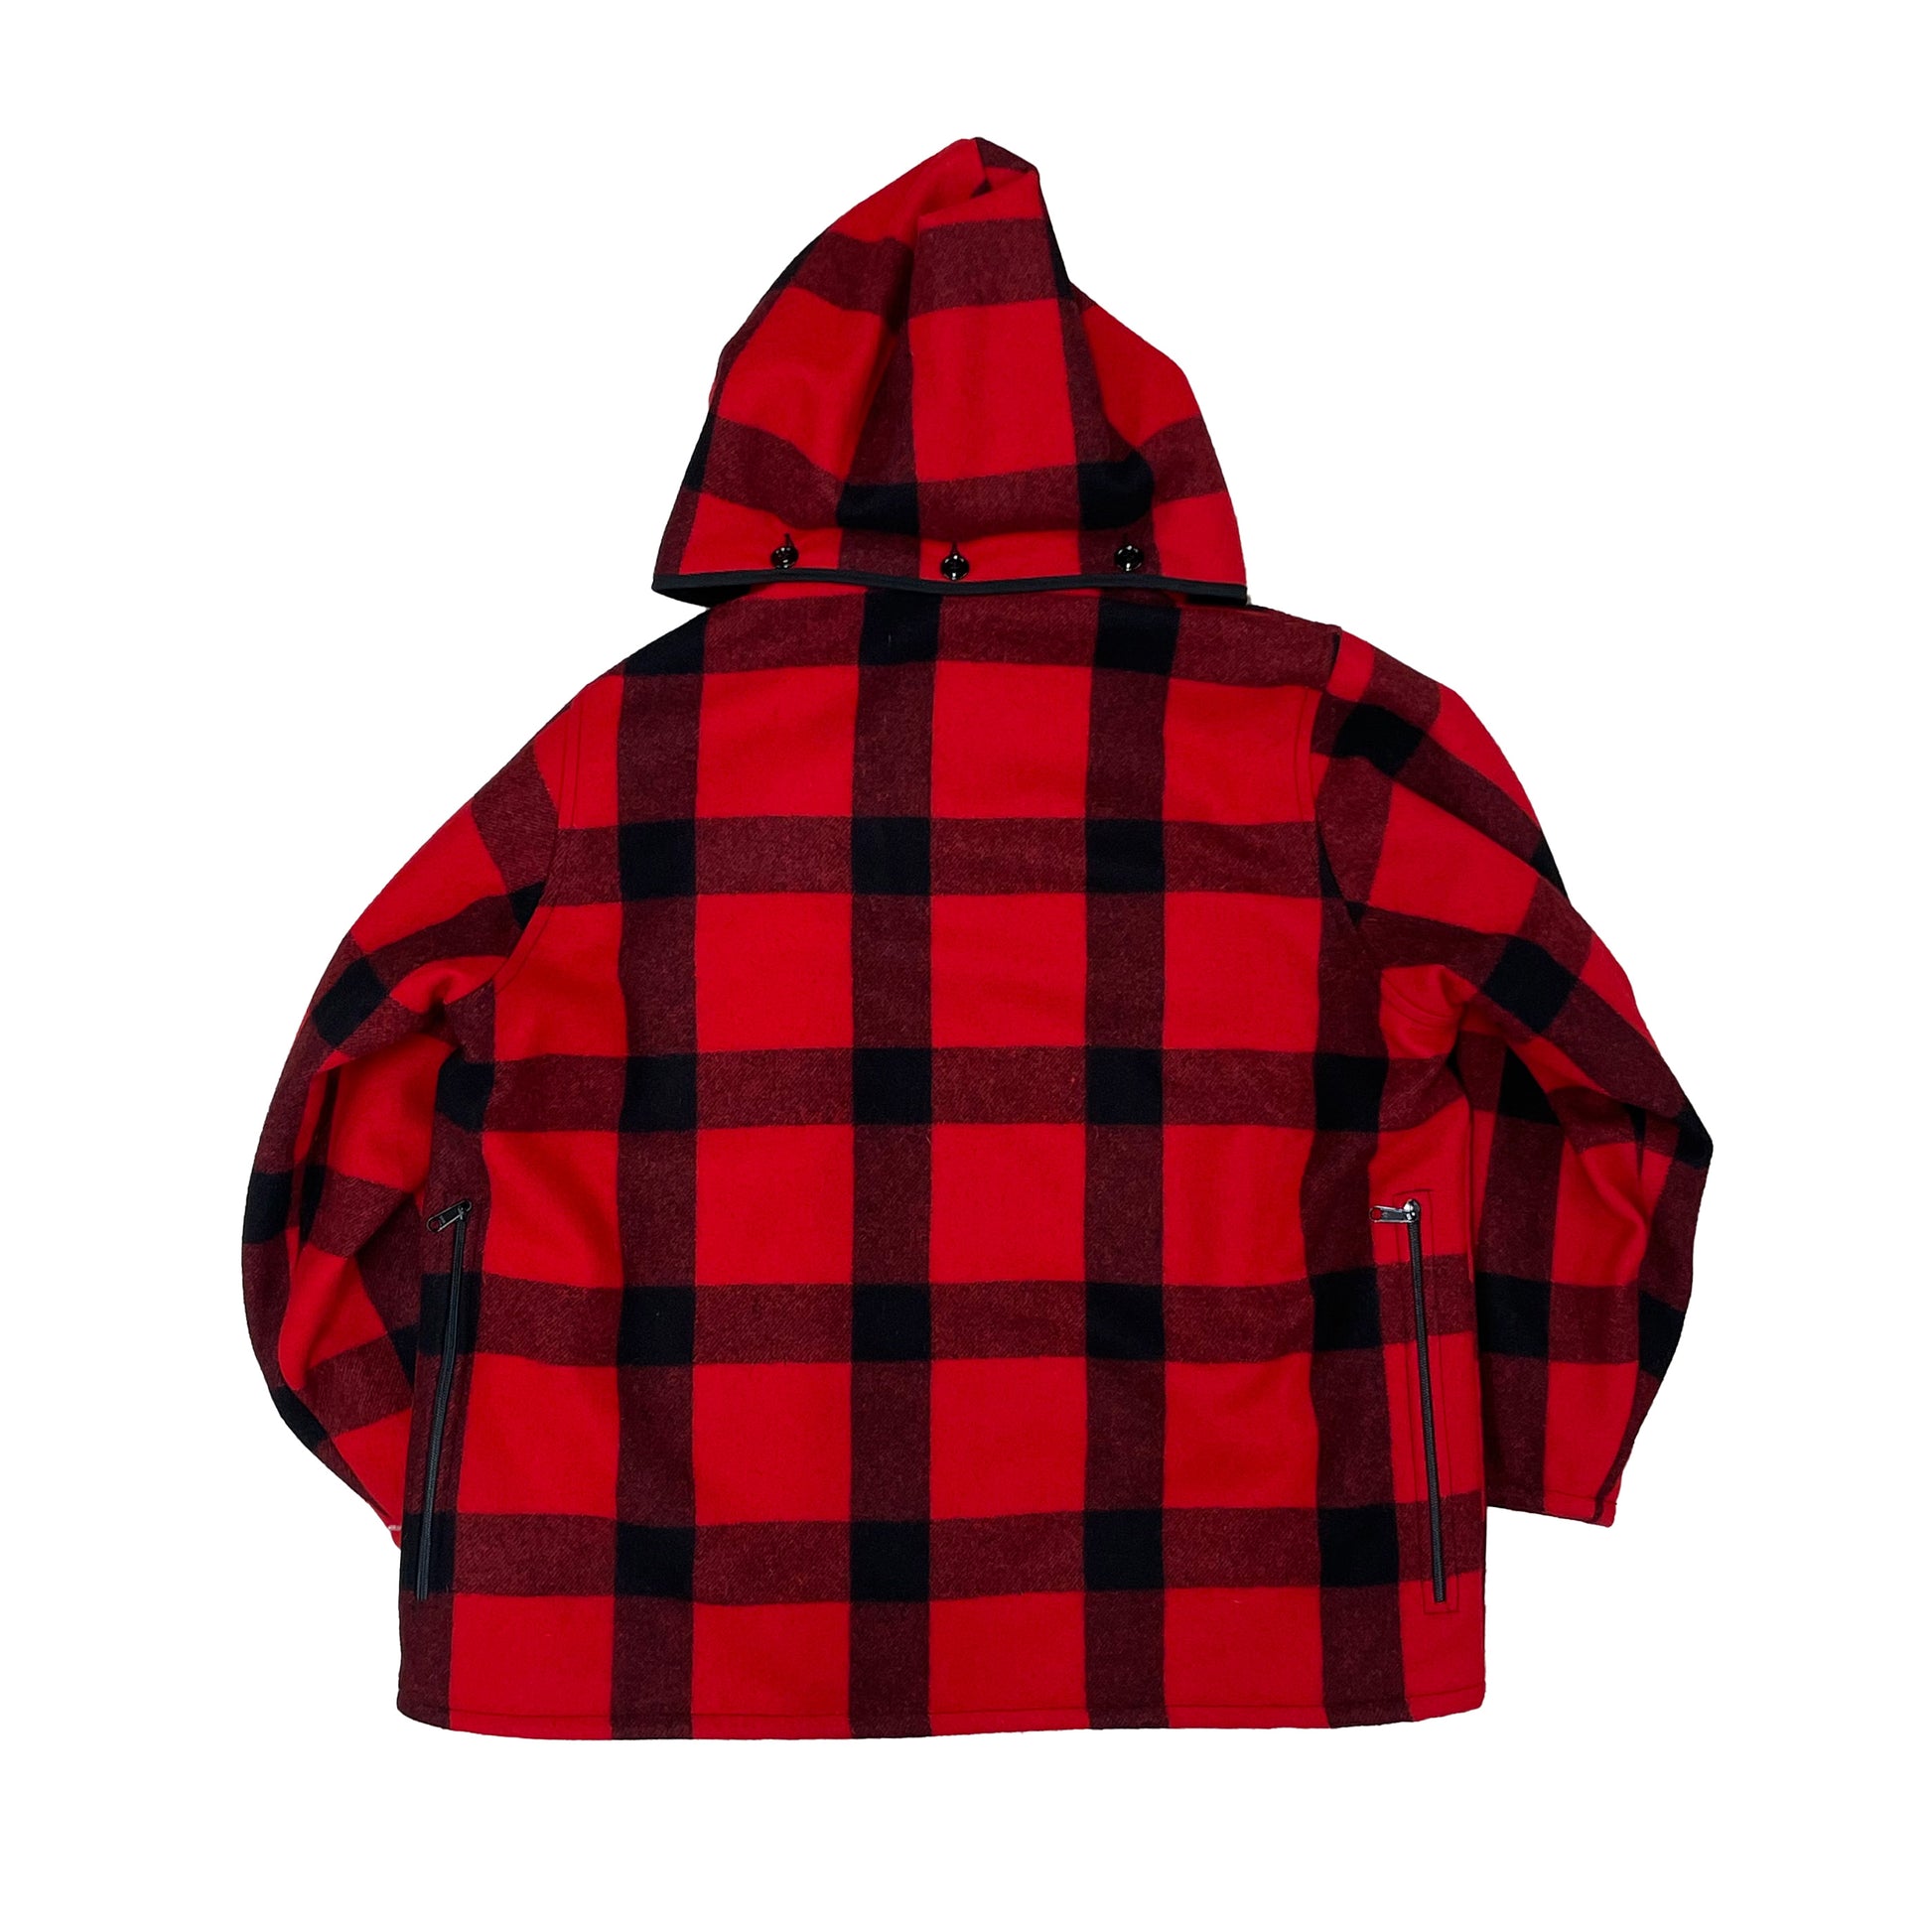 AZ 25 wool mackinaw coat with detachable hood - red and black plaid, back view